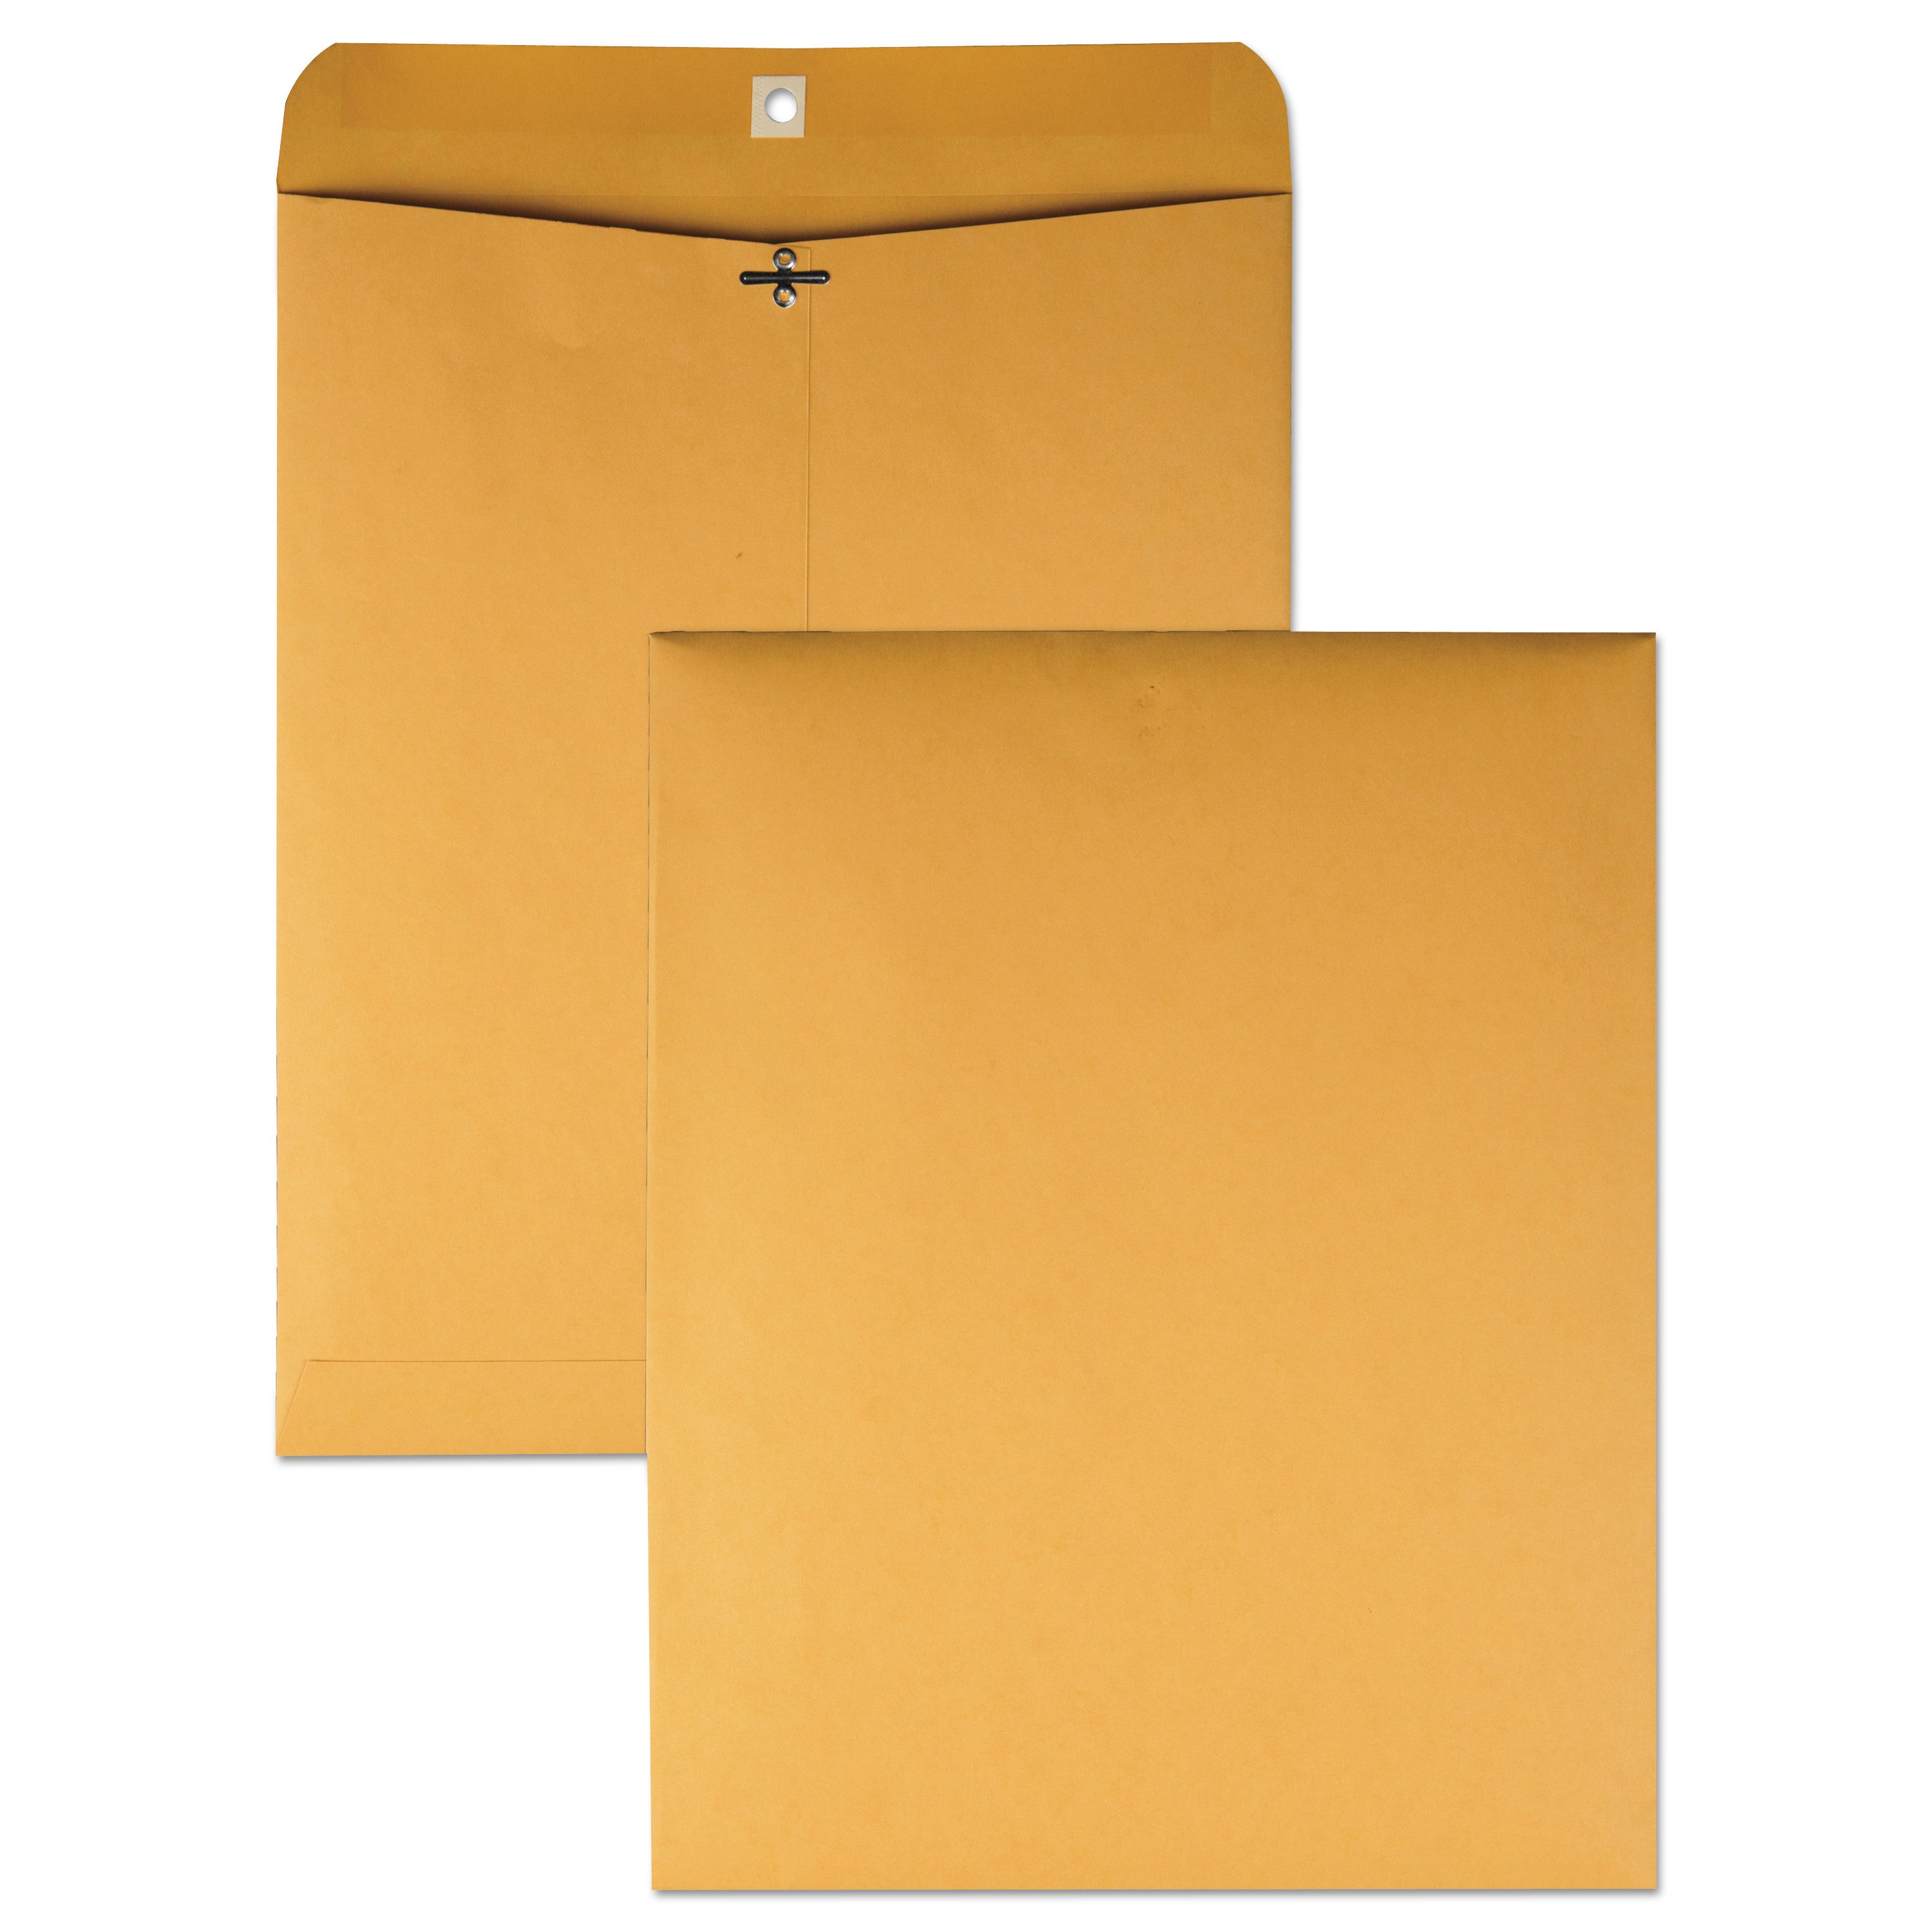 Clasp Envelope, 32 lb Bond Weight Kraft, #14 1/2, Square Flap, Clasp/Gummed Closure, 11.5 x 14.5, Brown Kraft, 100/Box - 